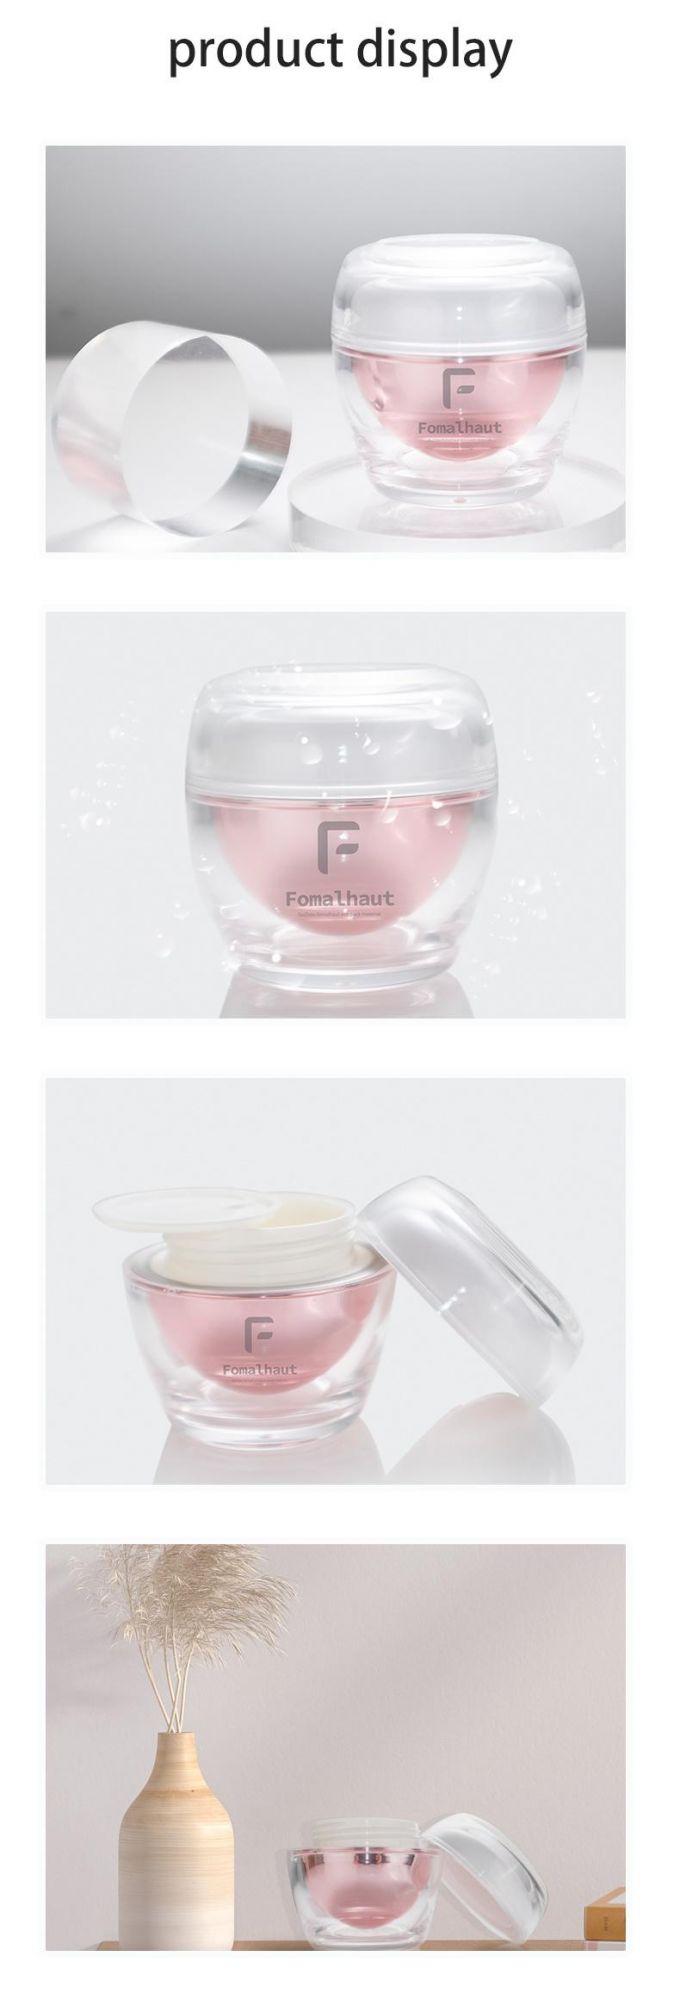 Fomalhaut Eco-Friendly Jar Cosmetic Packaging as PMMA Plastic Luxury Jar